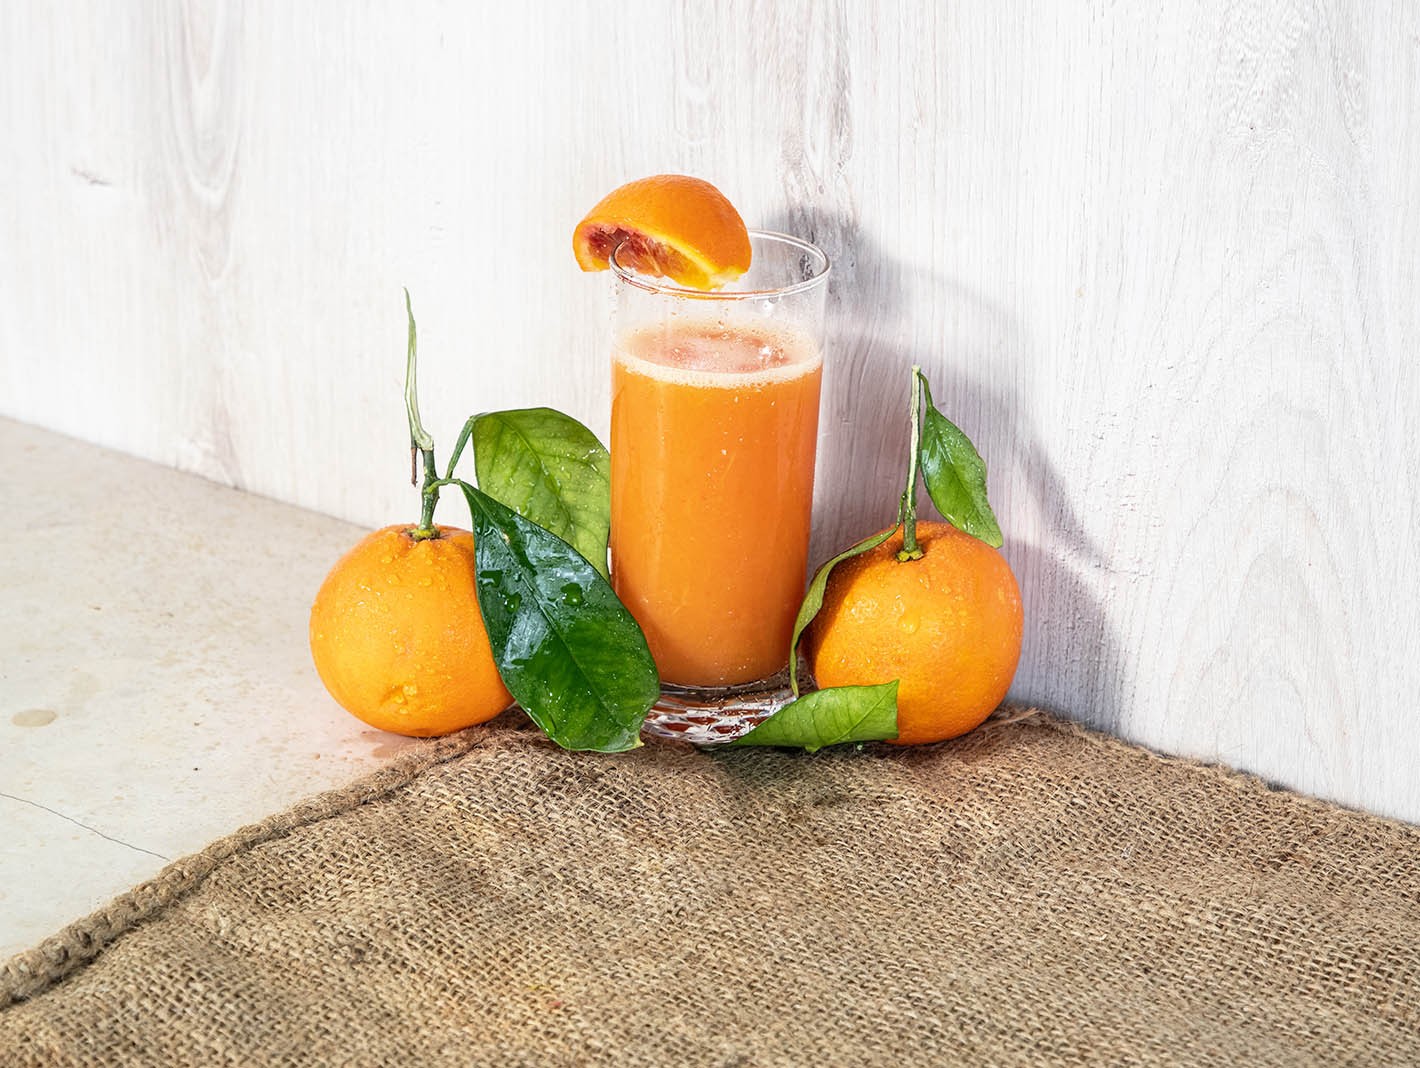 Oranfrutta copy of Tarocco Oranges for fresh-squeezed juice